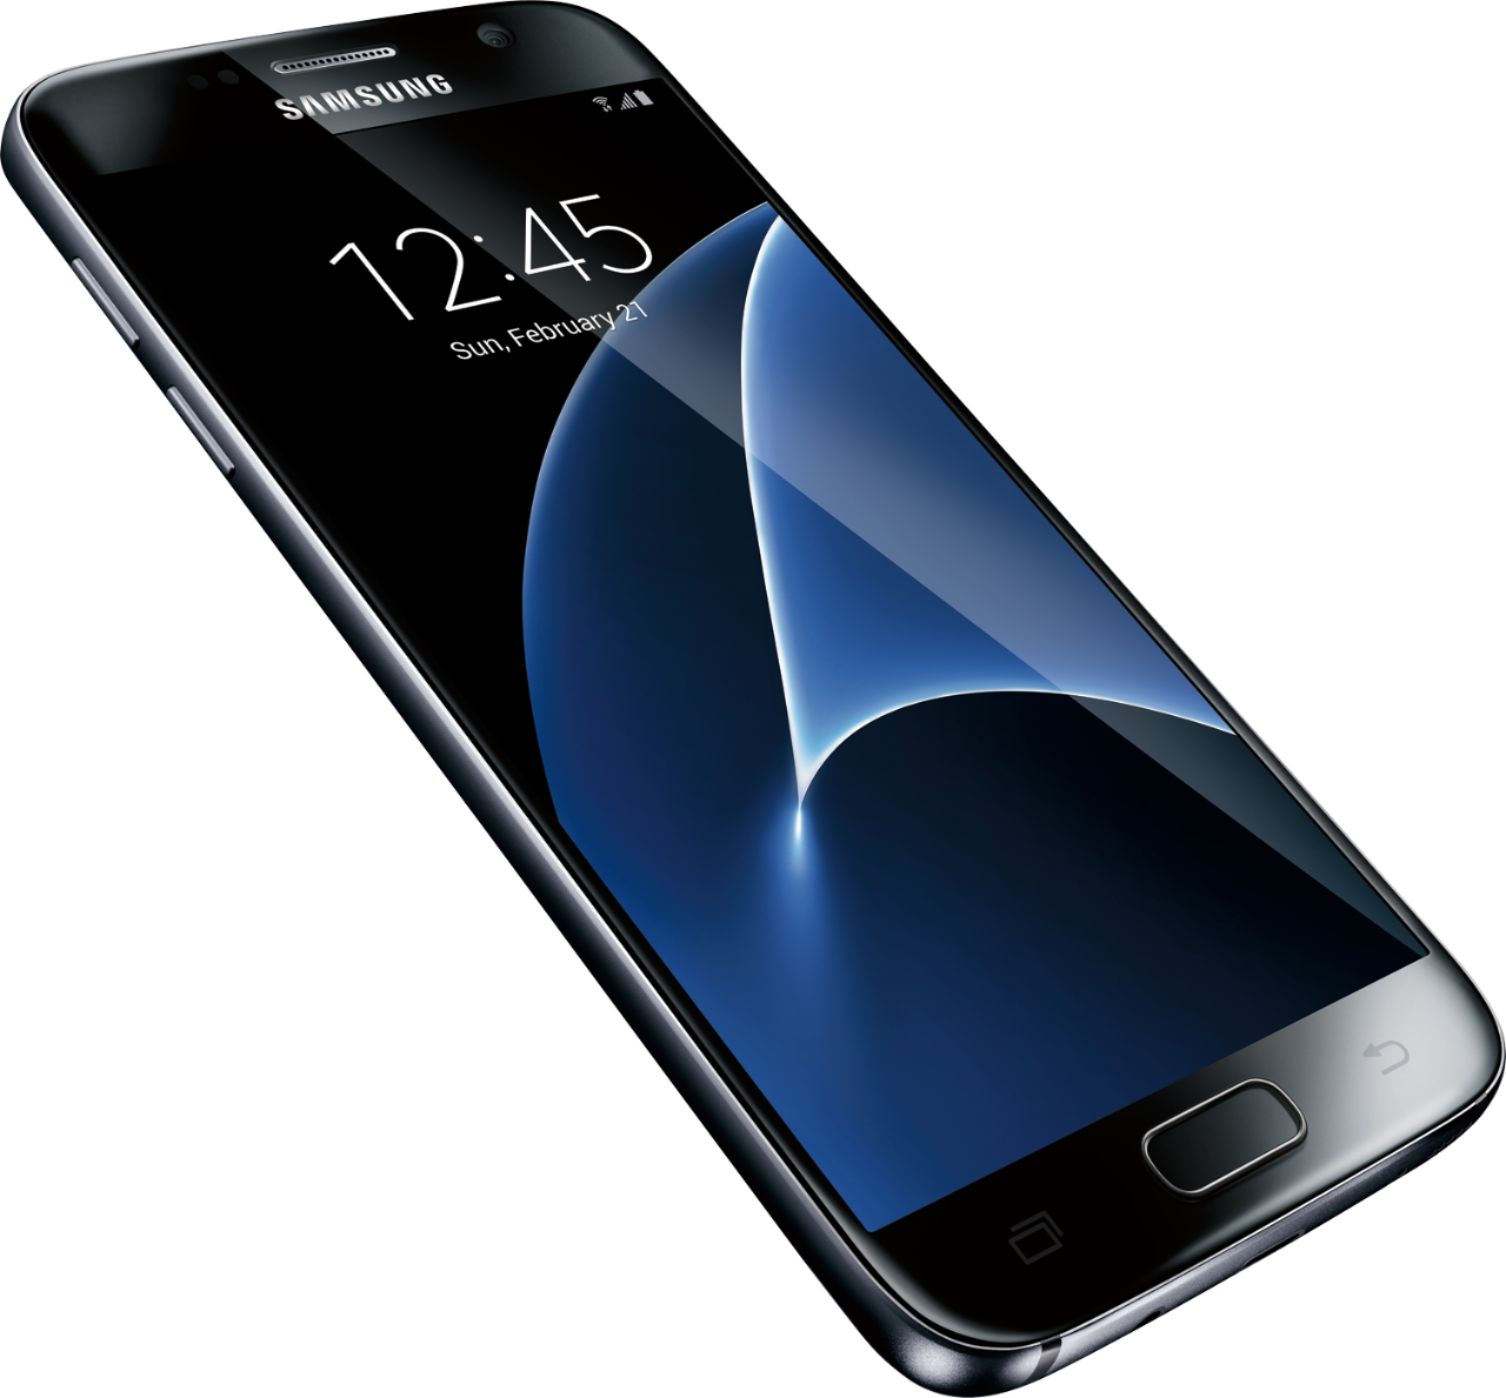 Penetratie Voorspellen Zonder Best Buy: Samsung Galaxy S7 4G LTE with 32GB Memory Cell Phone (Unlocked)  Black Onyx SM-G930UZKAXAA